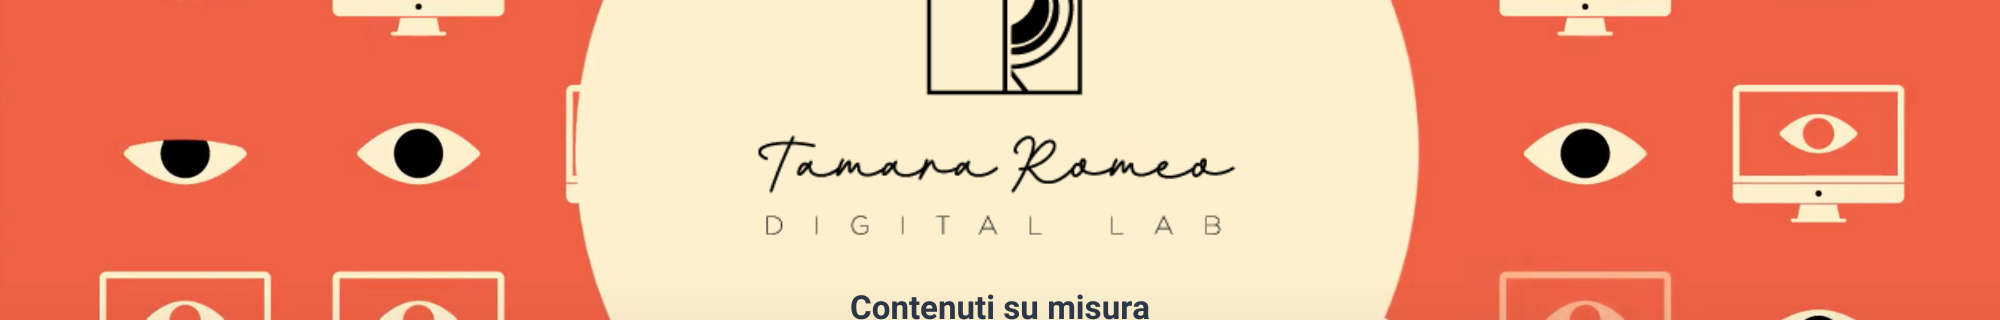 Tamara Romeo's profile banner